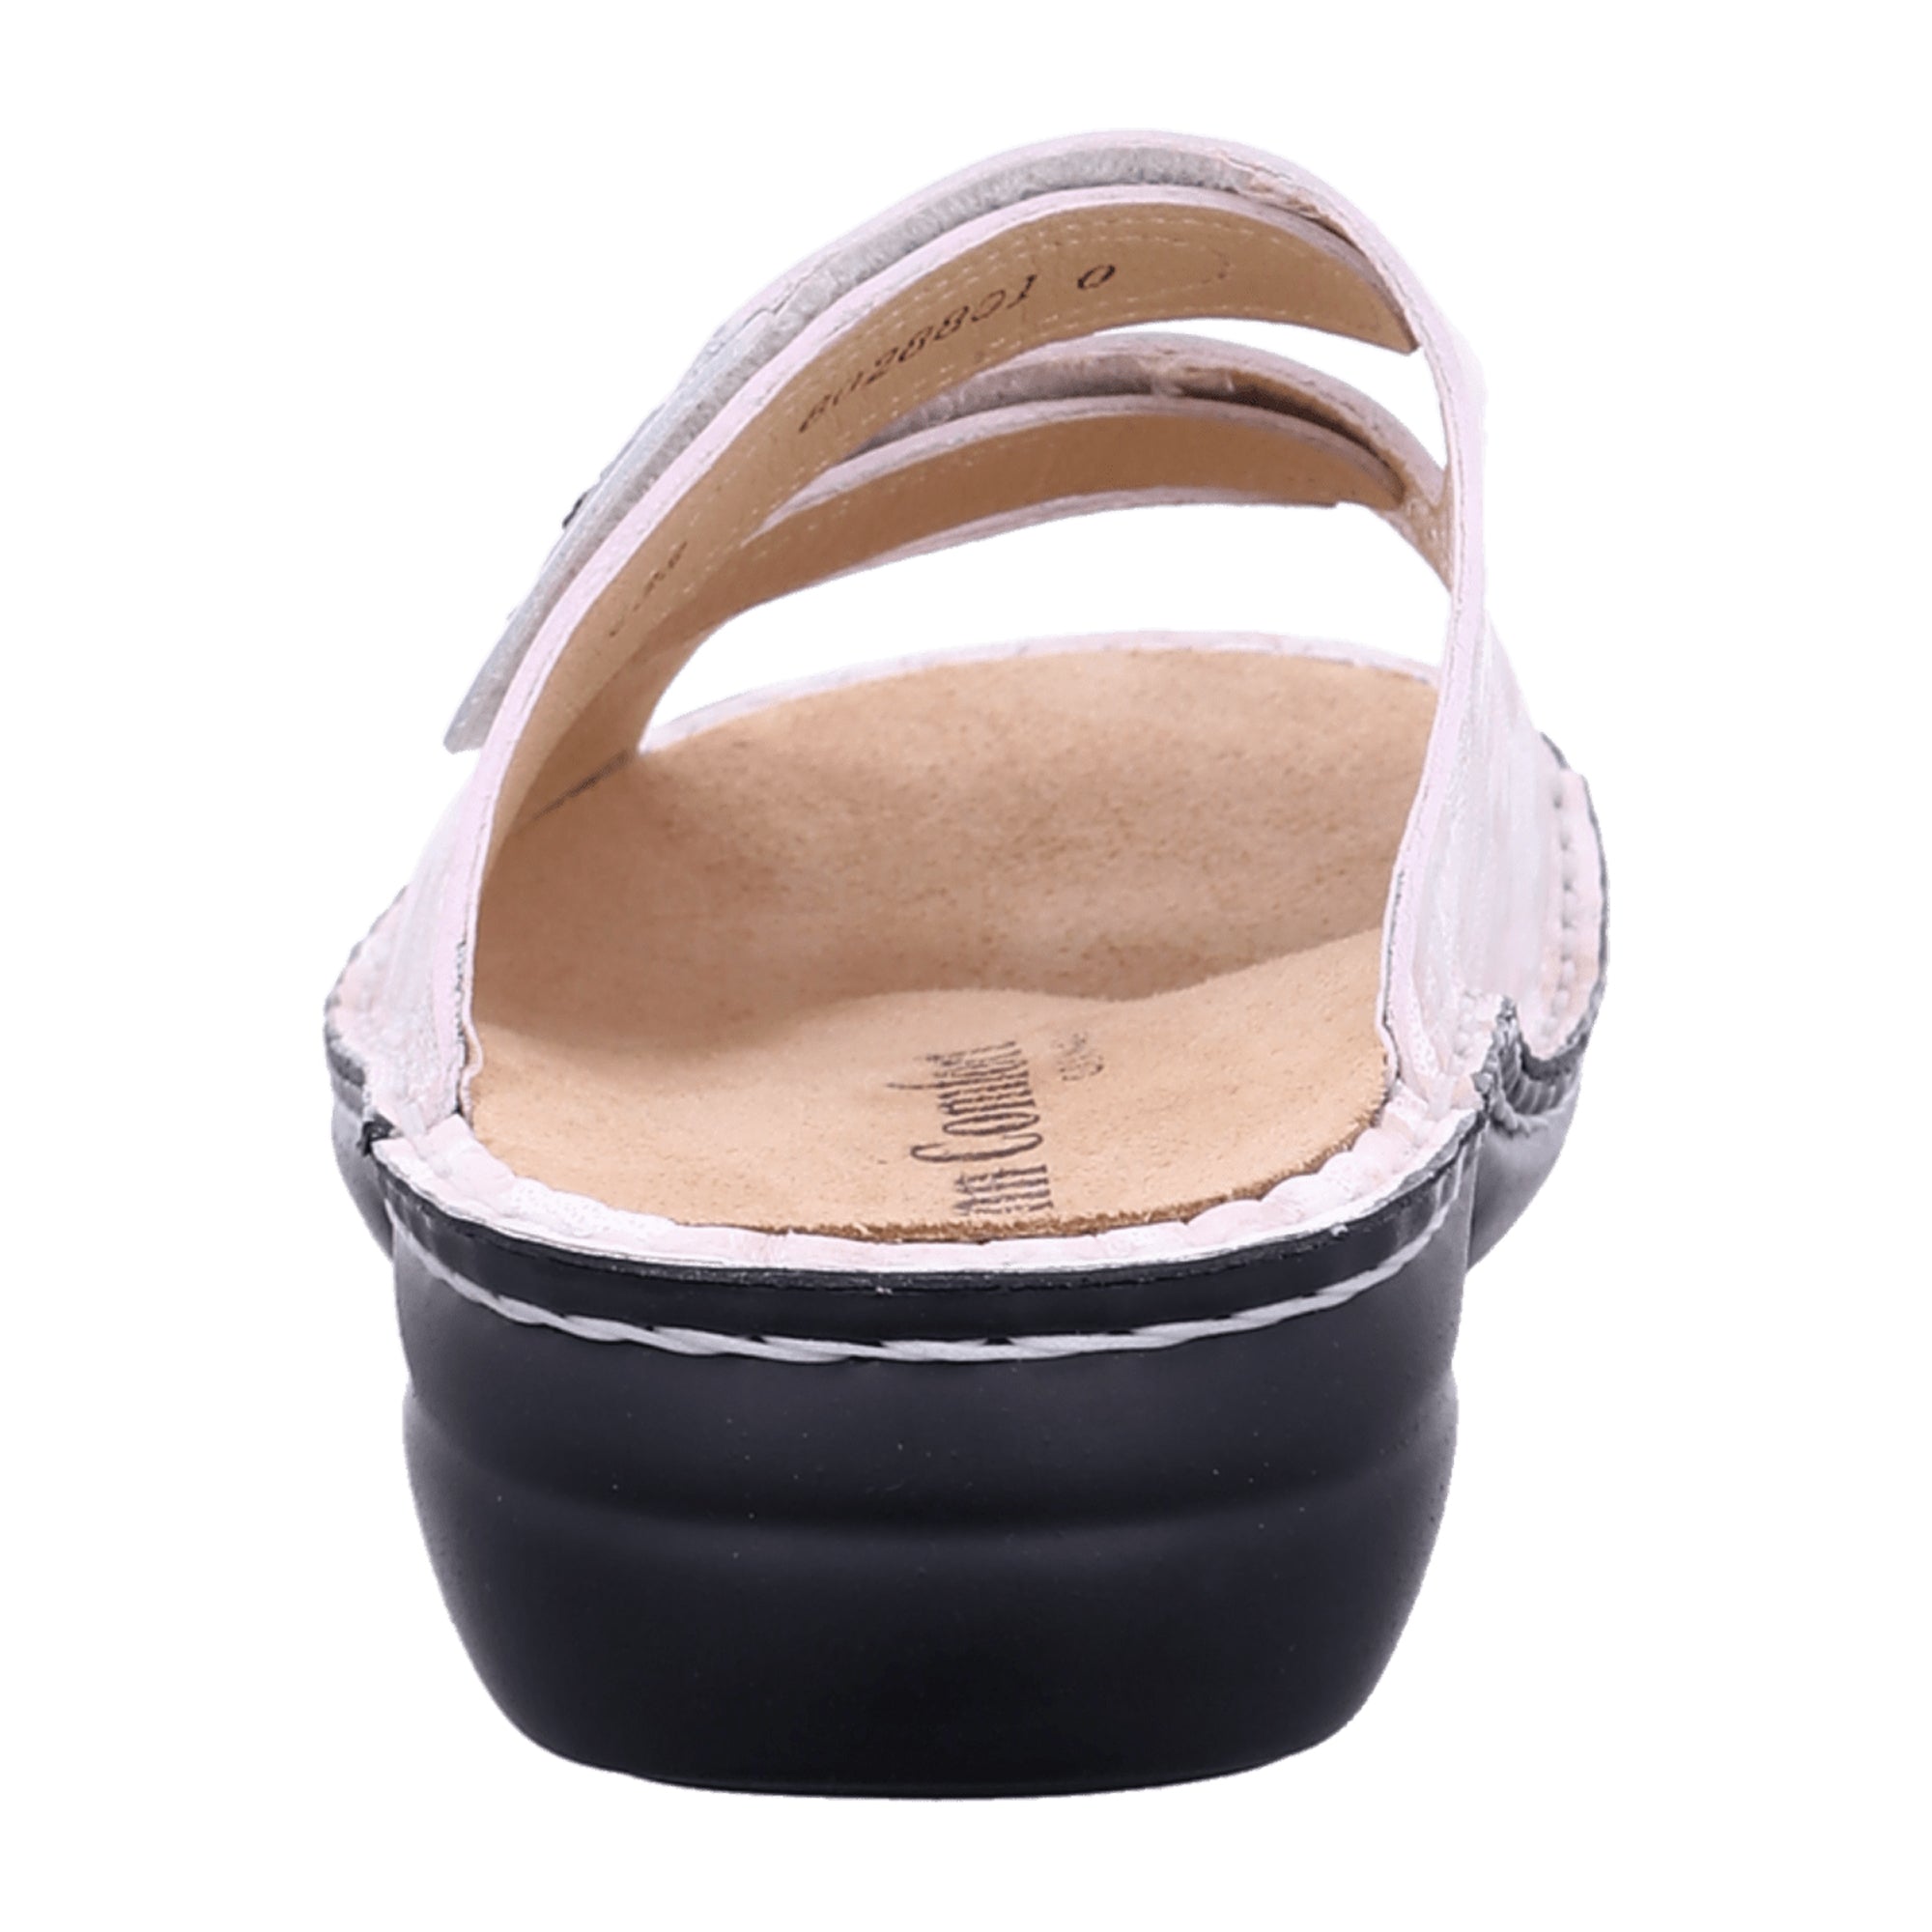 Finn Comfort KOS Women's Comfort Sandals - Stylish & Durable in White